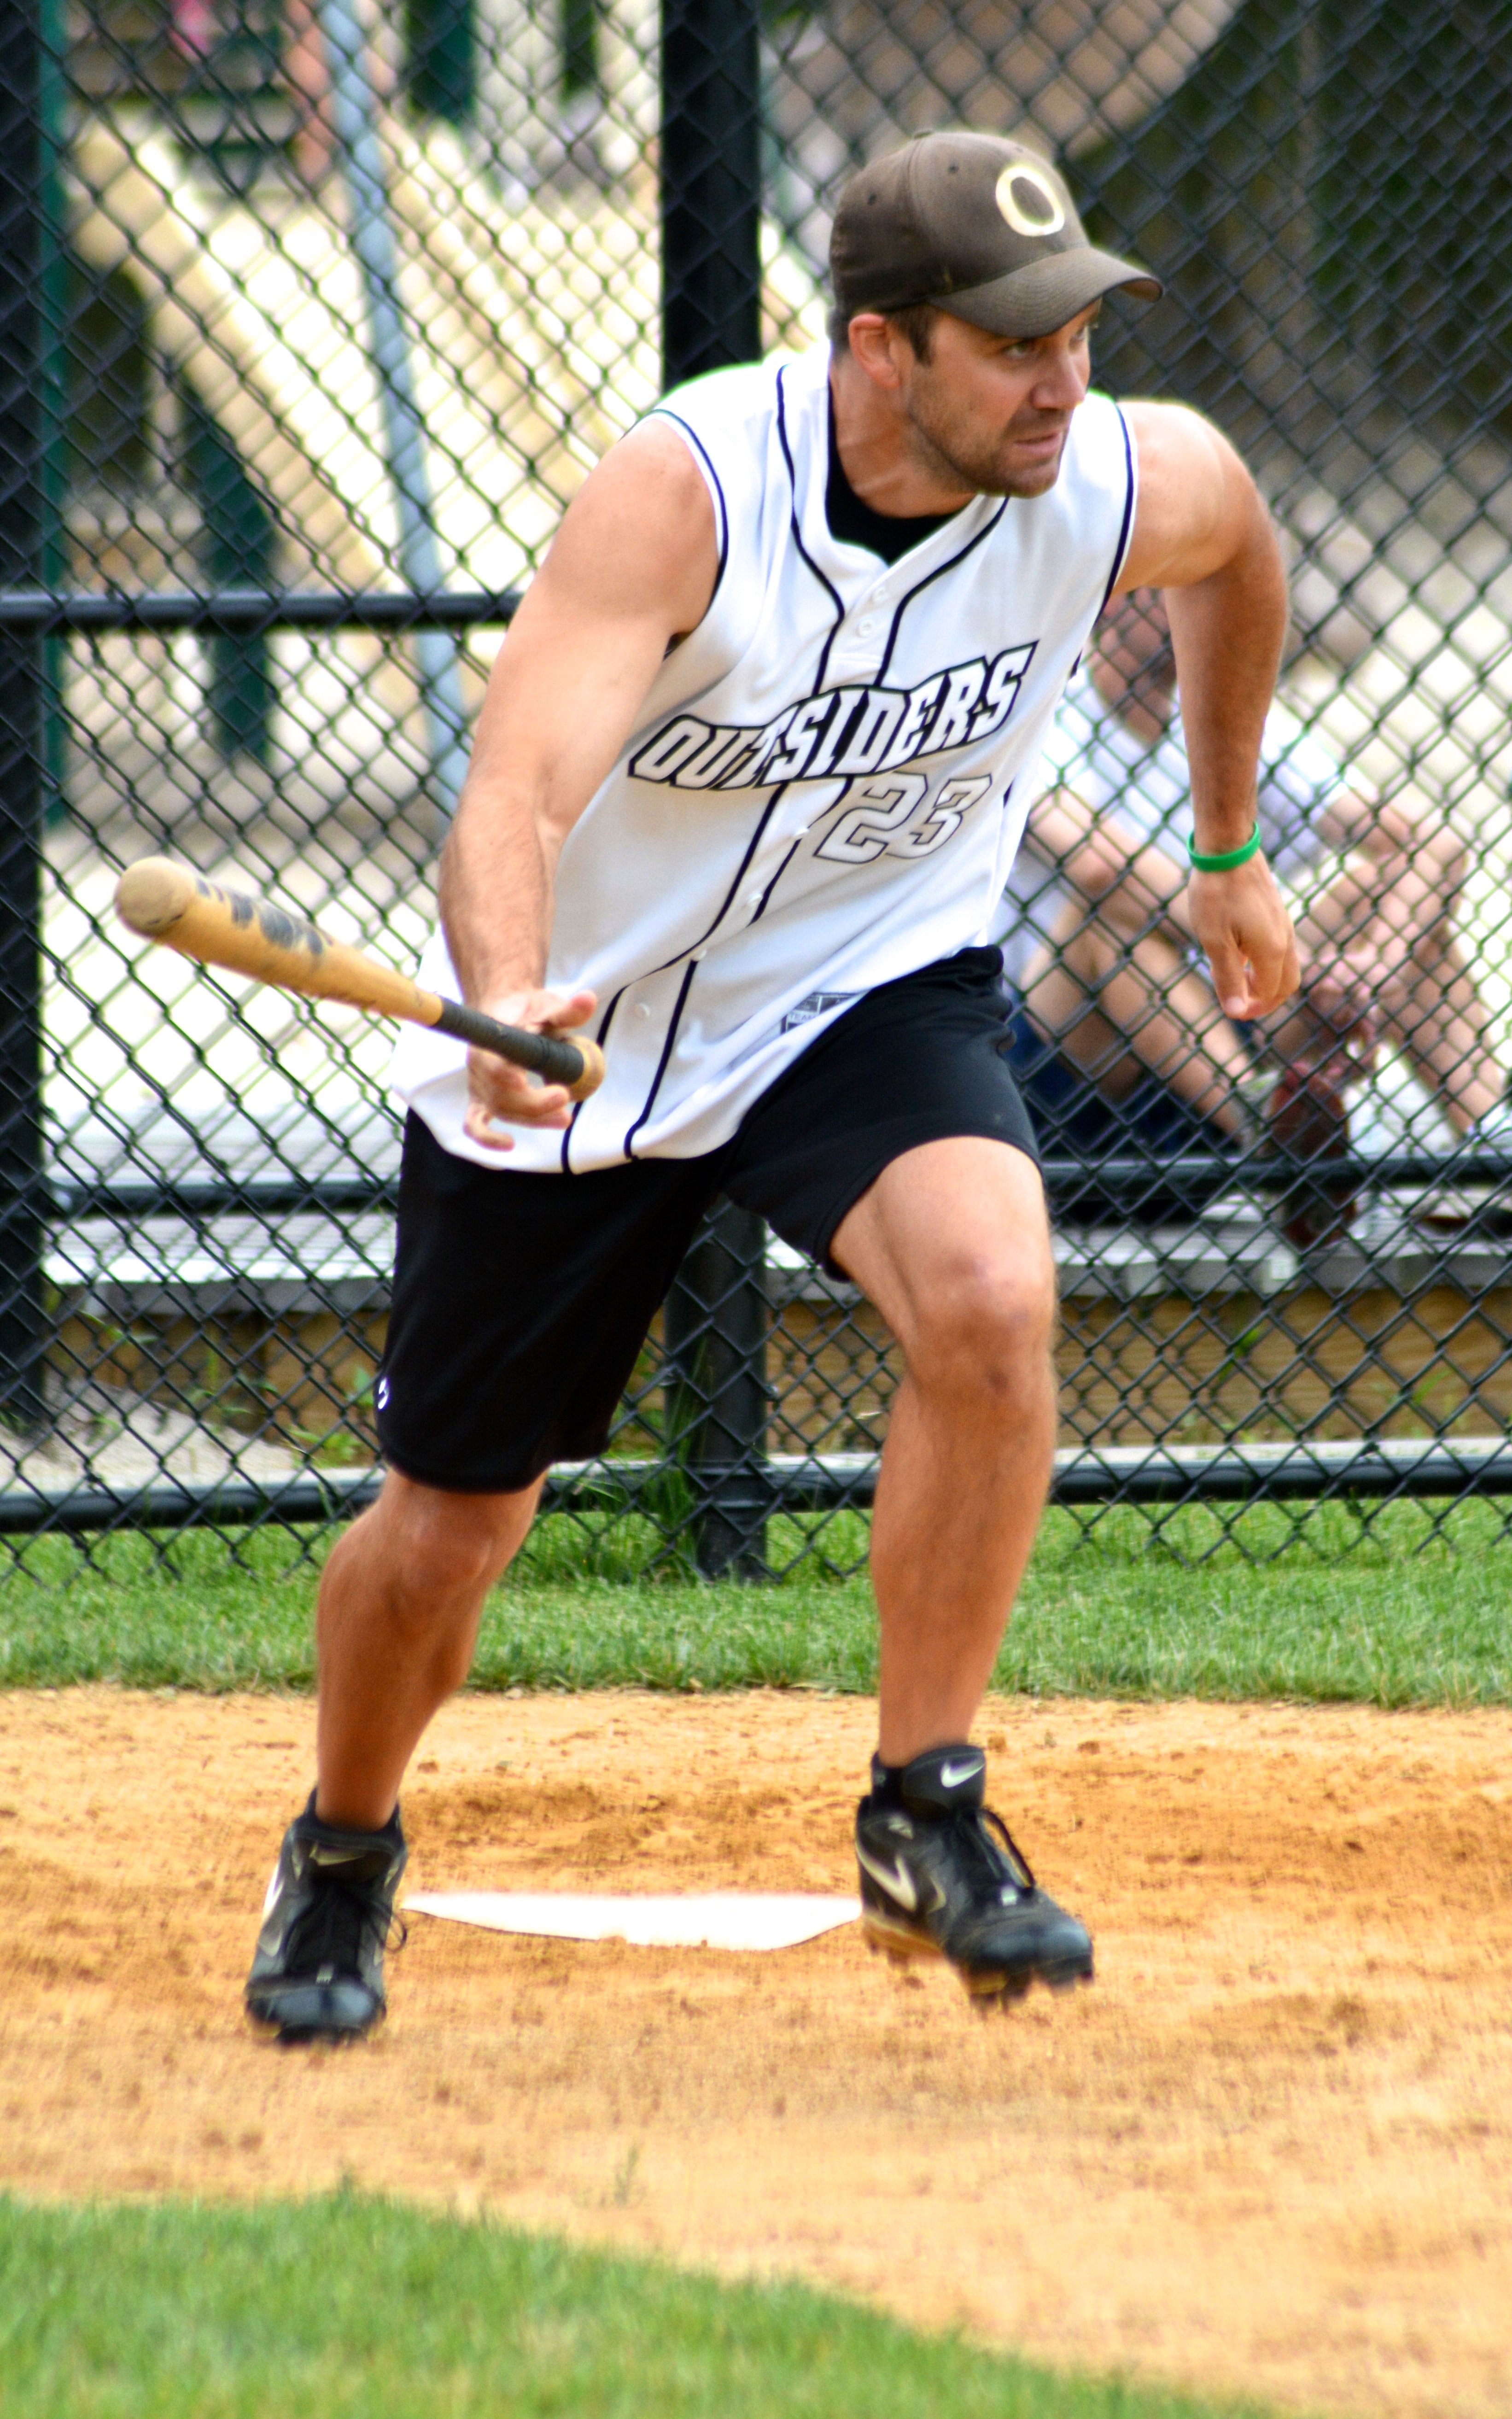 Sean Boyle running to first base.